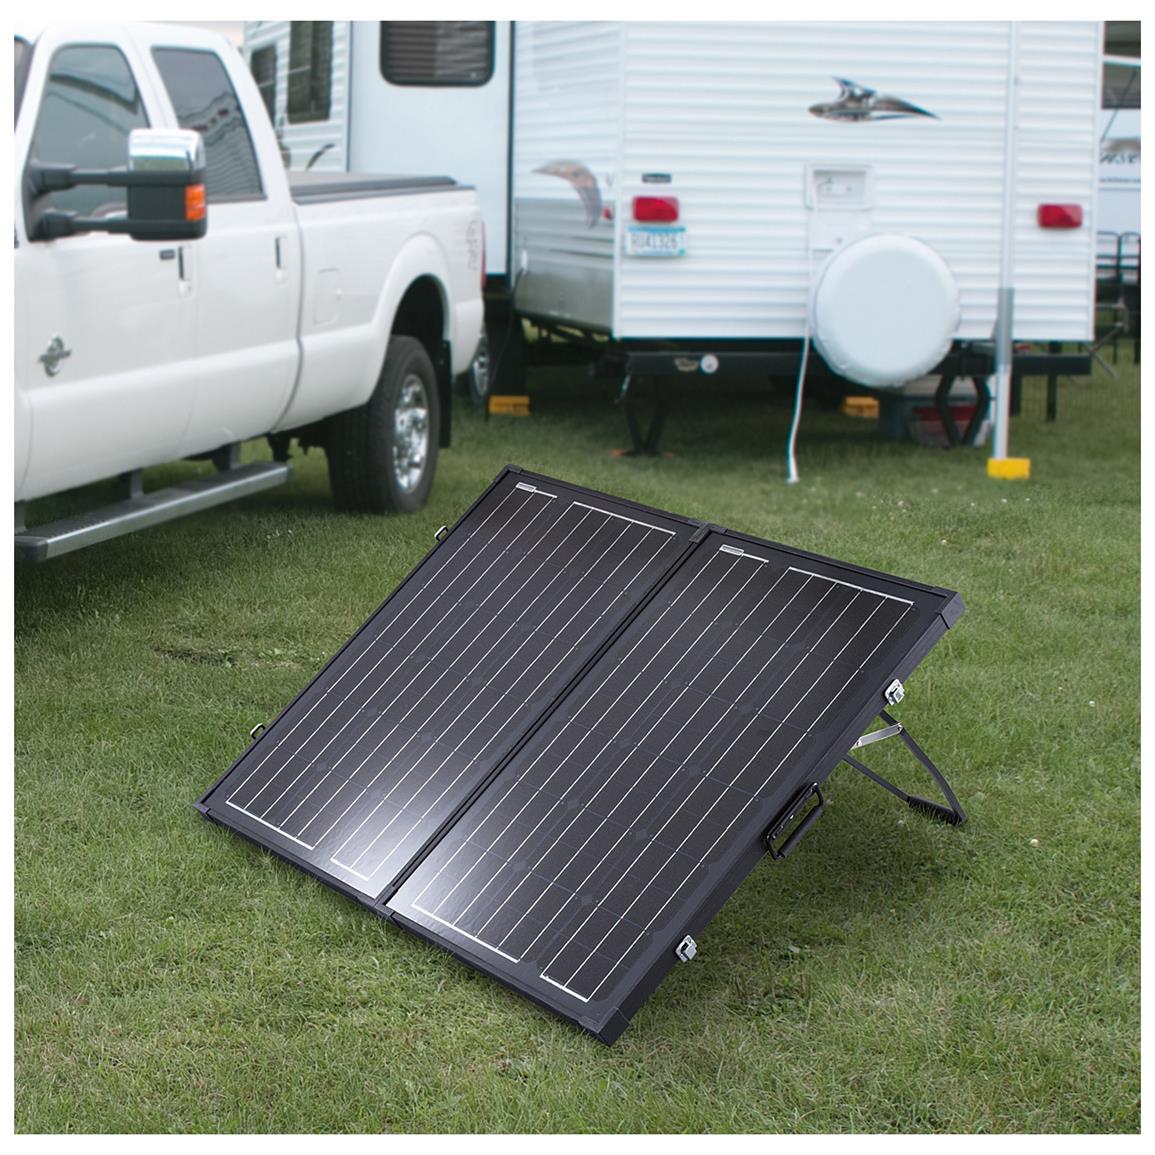 Nature Power Portable Monocrystalline Silicon Solar Panels in Briefcase Design 619357, Solar